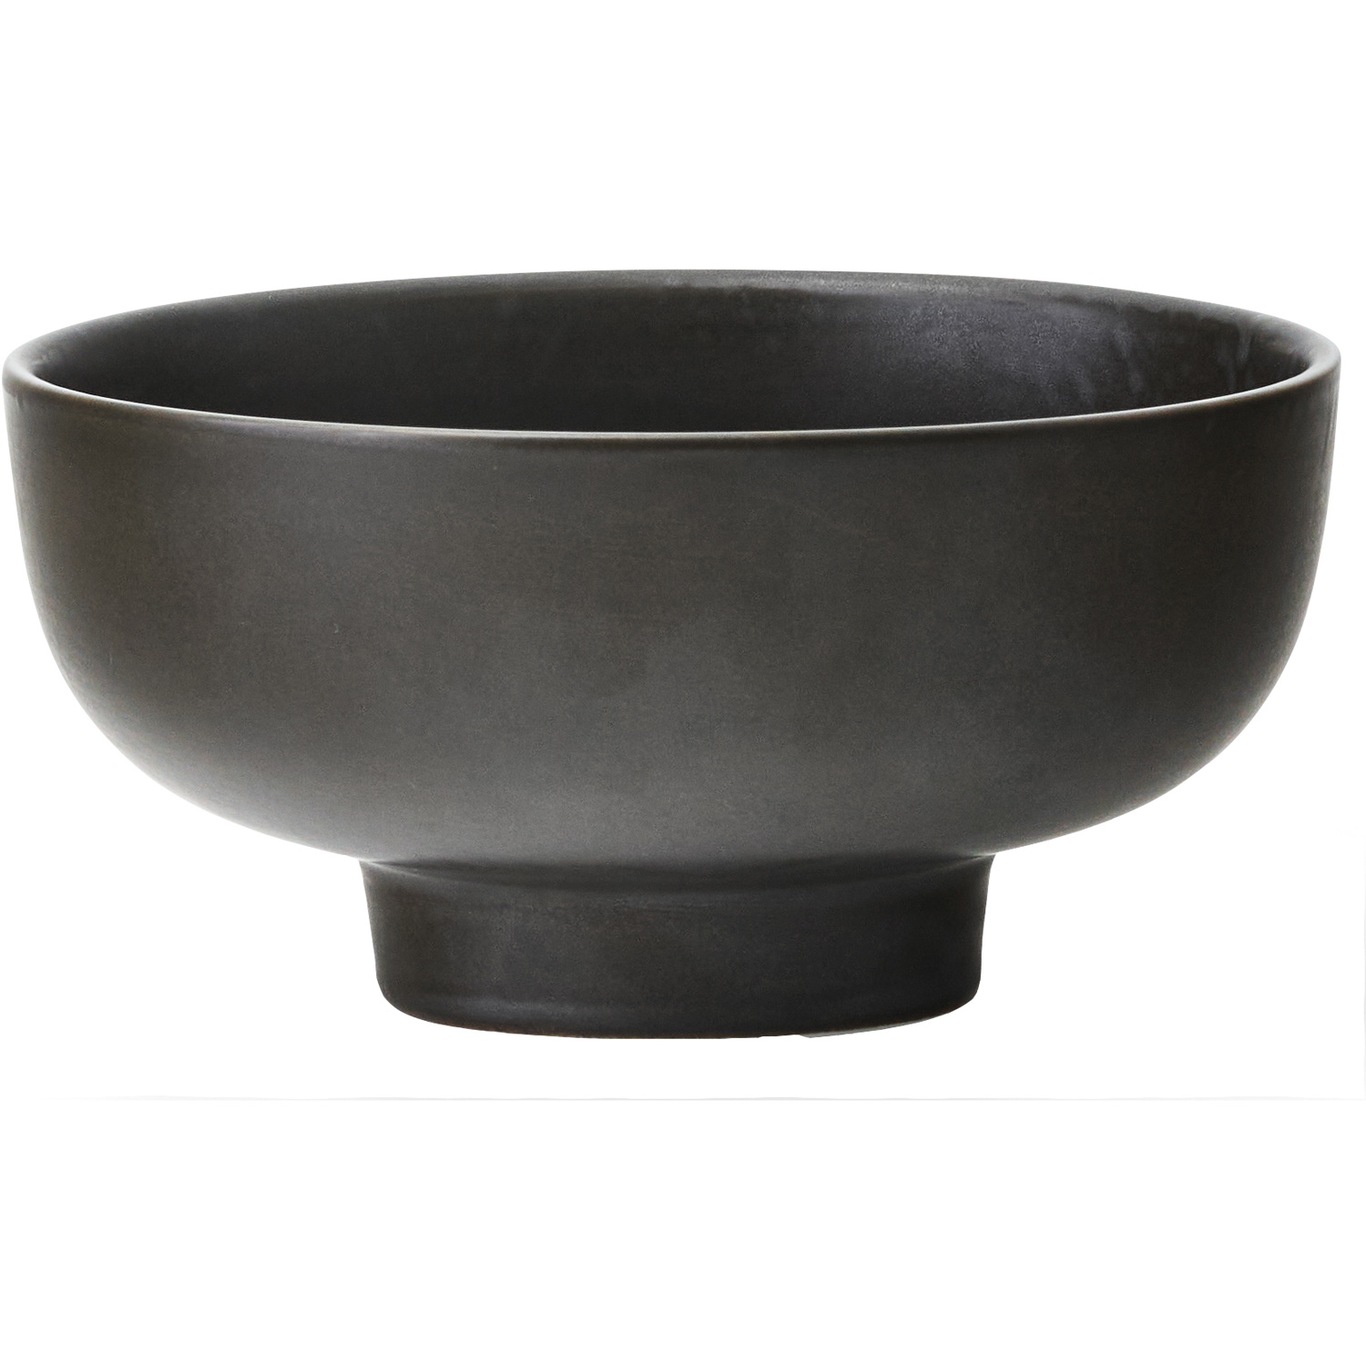 New Norm Fruit Bowl With Base Ø12 cm, Dark Glazed